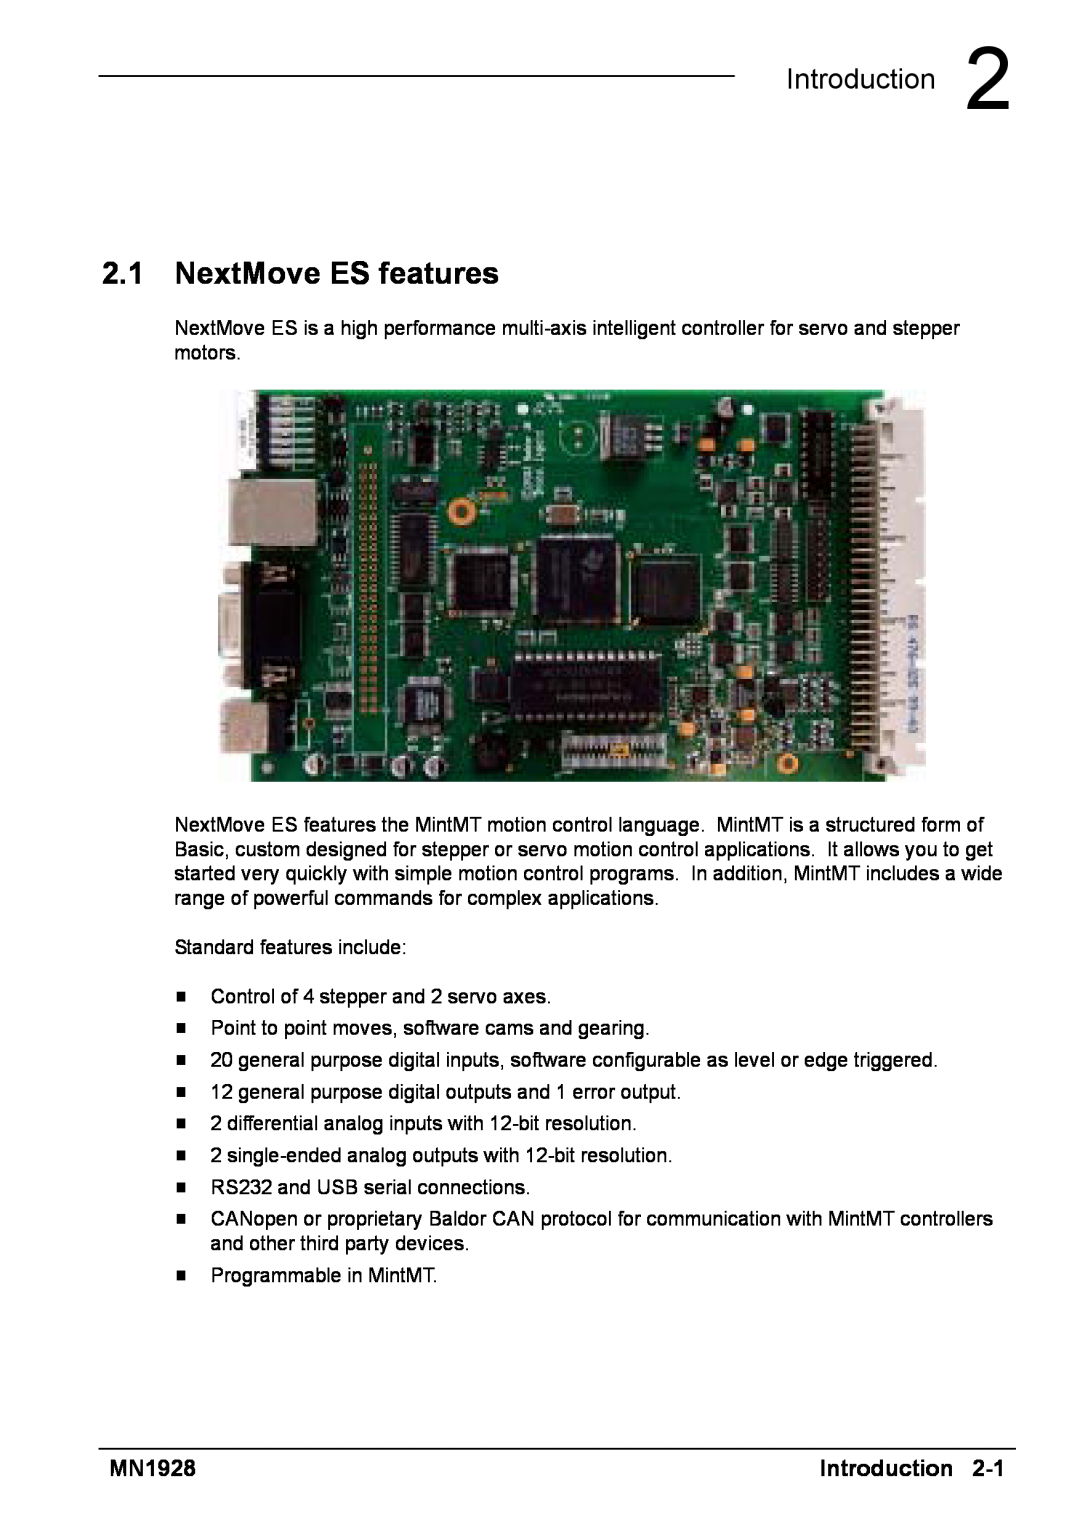 Baldor MN1928 installation manual NextMove ES features, Introduction 